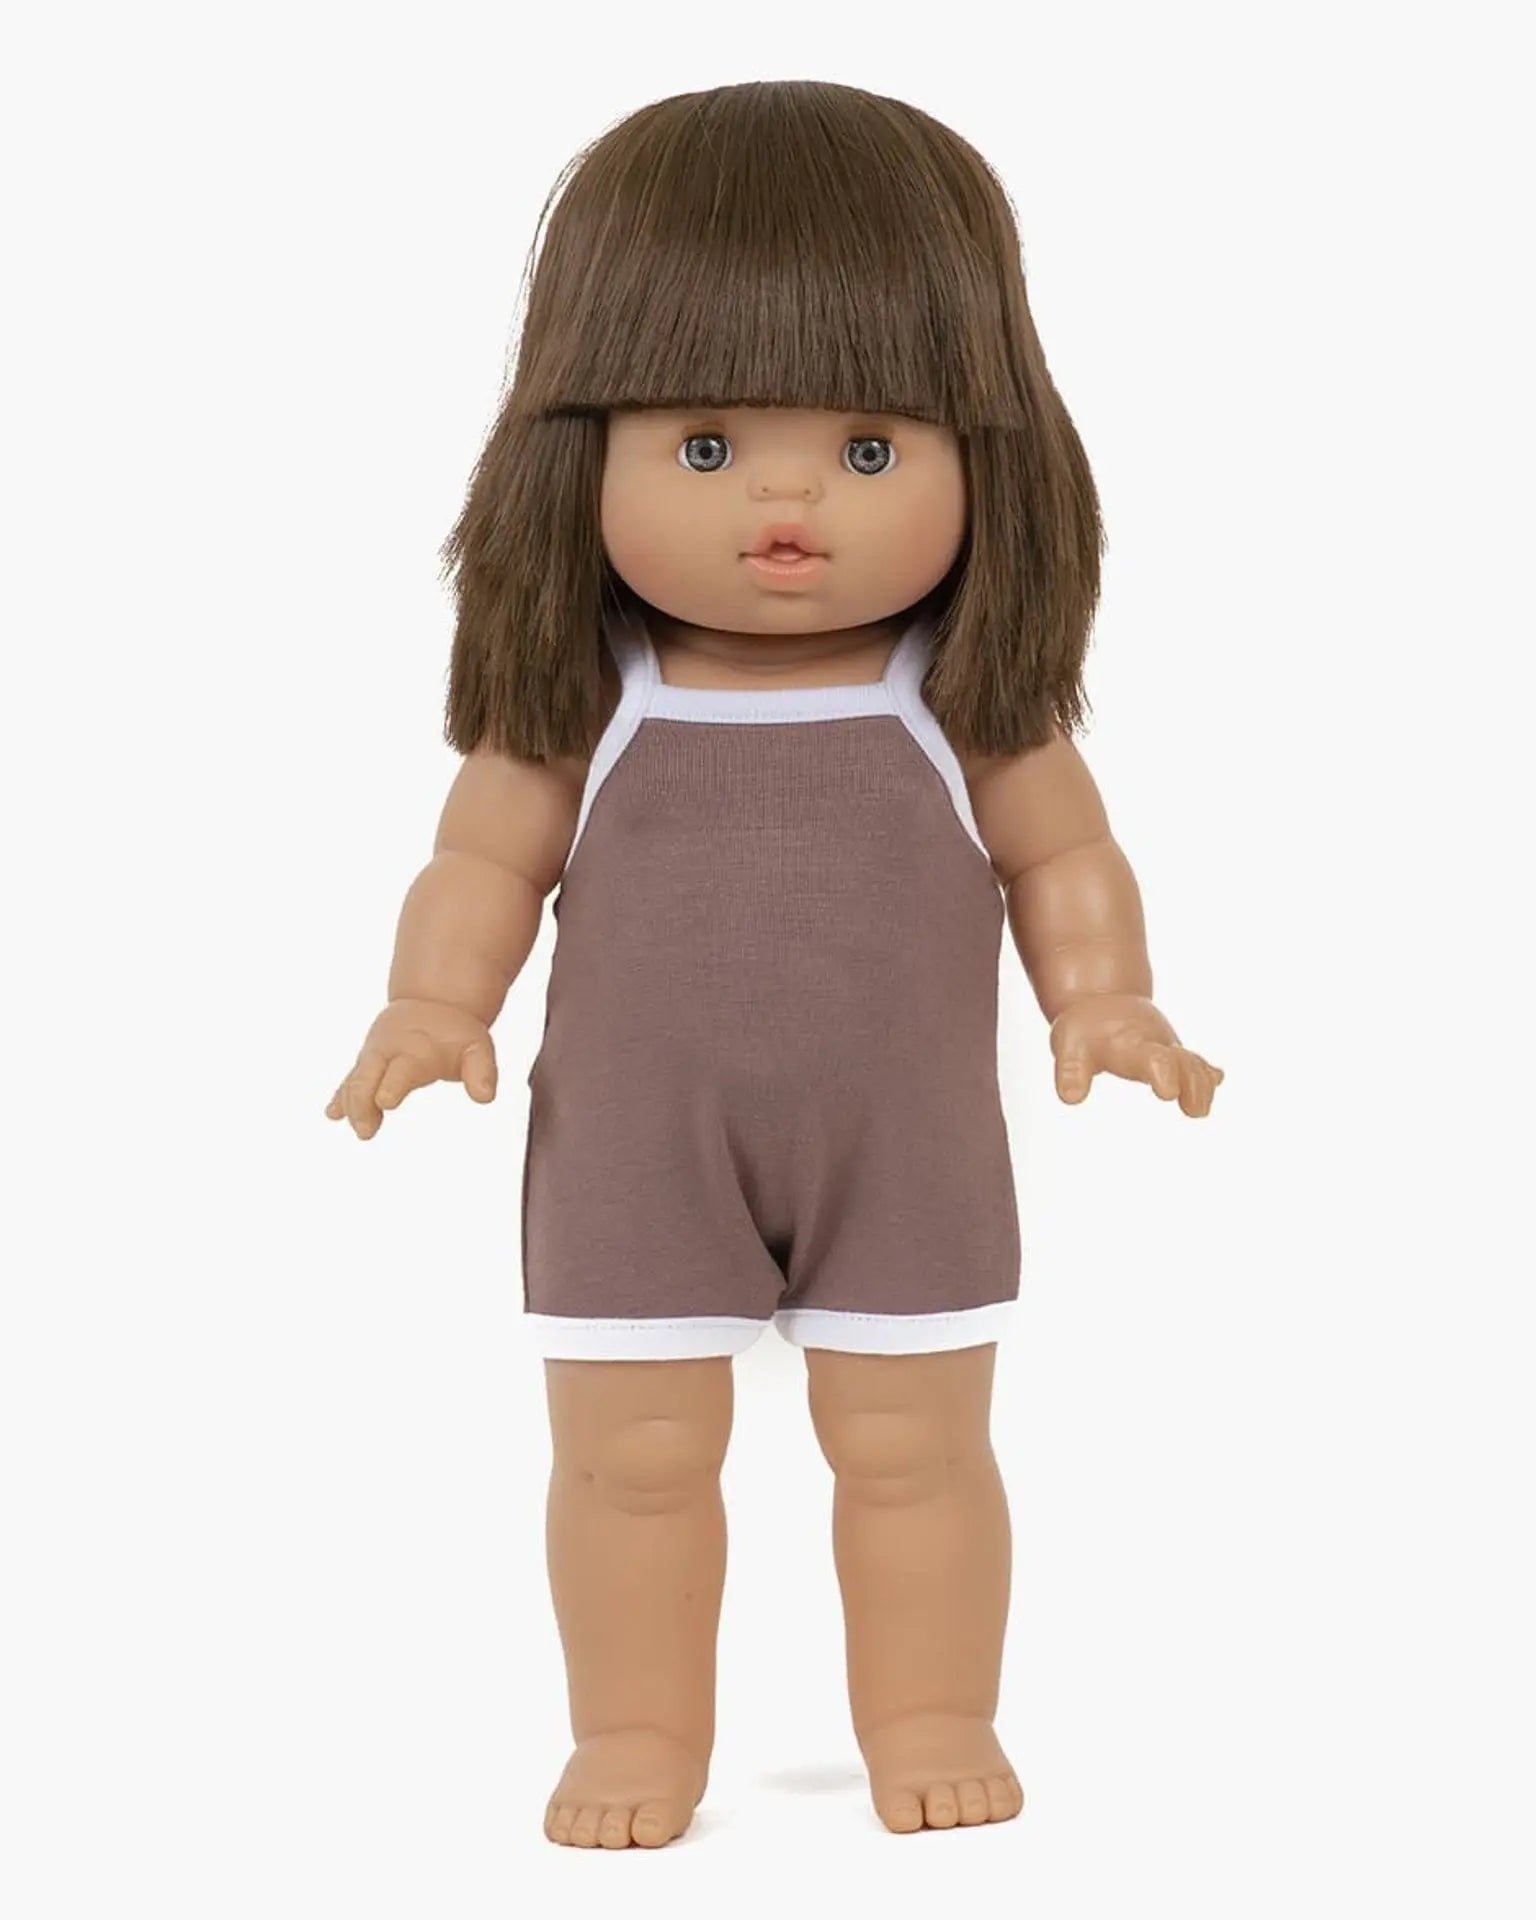 Chléa European Girl Baby Doll Without Clothing Minikane